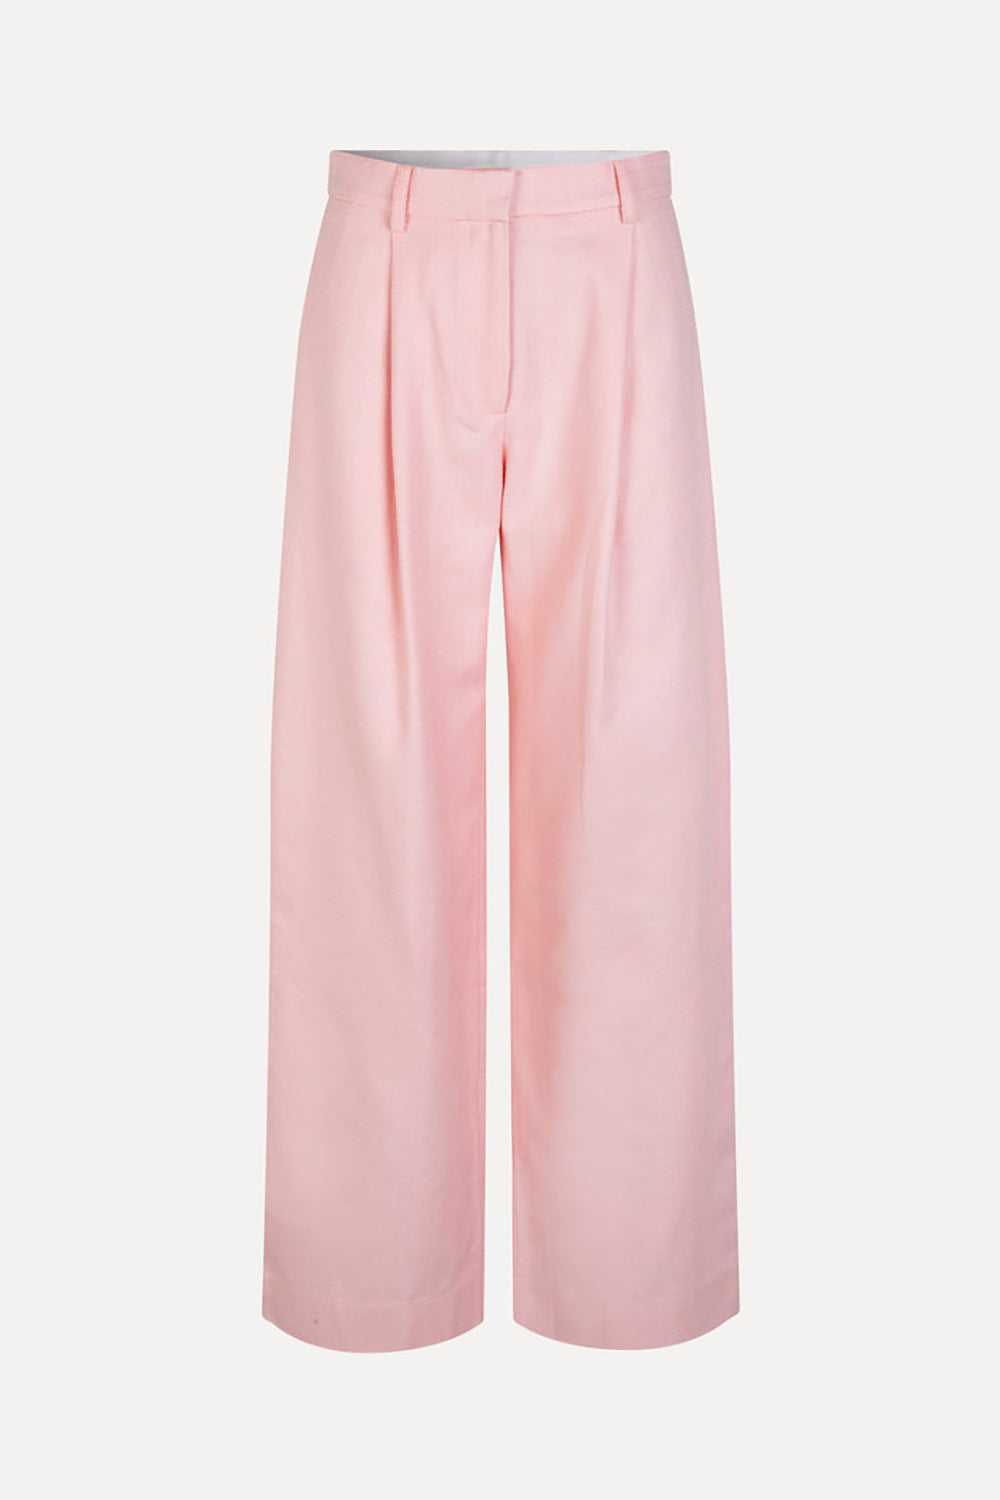 Womens Trouser | Stine Goya Jesabell pant | The Standard Store